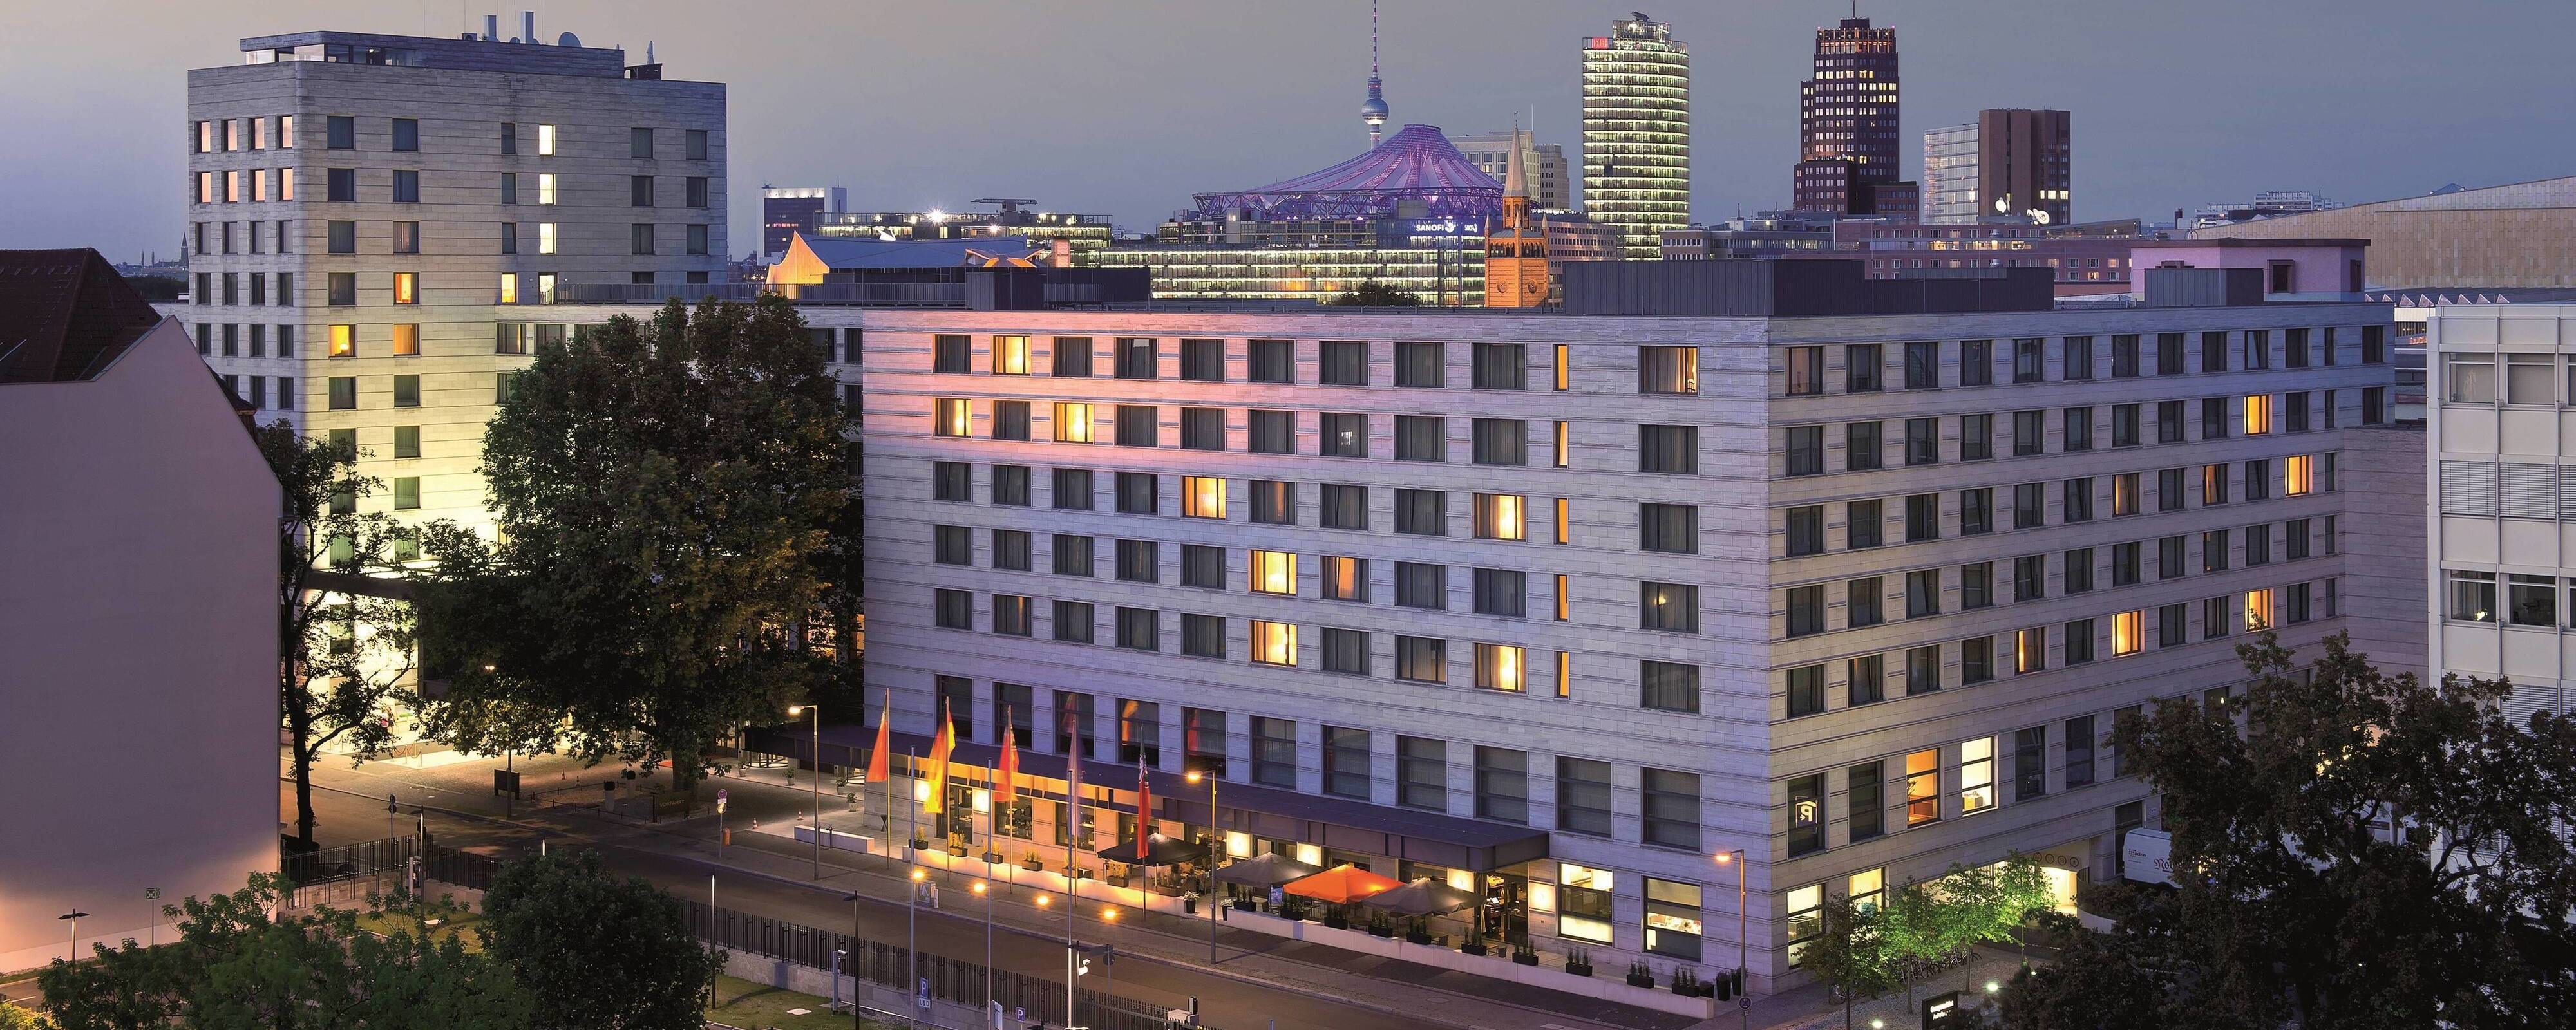 Hotel Berlin Central District: Berlin Luxury Hotels